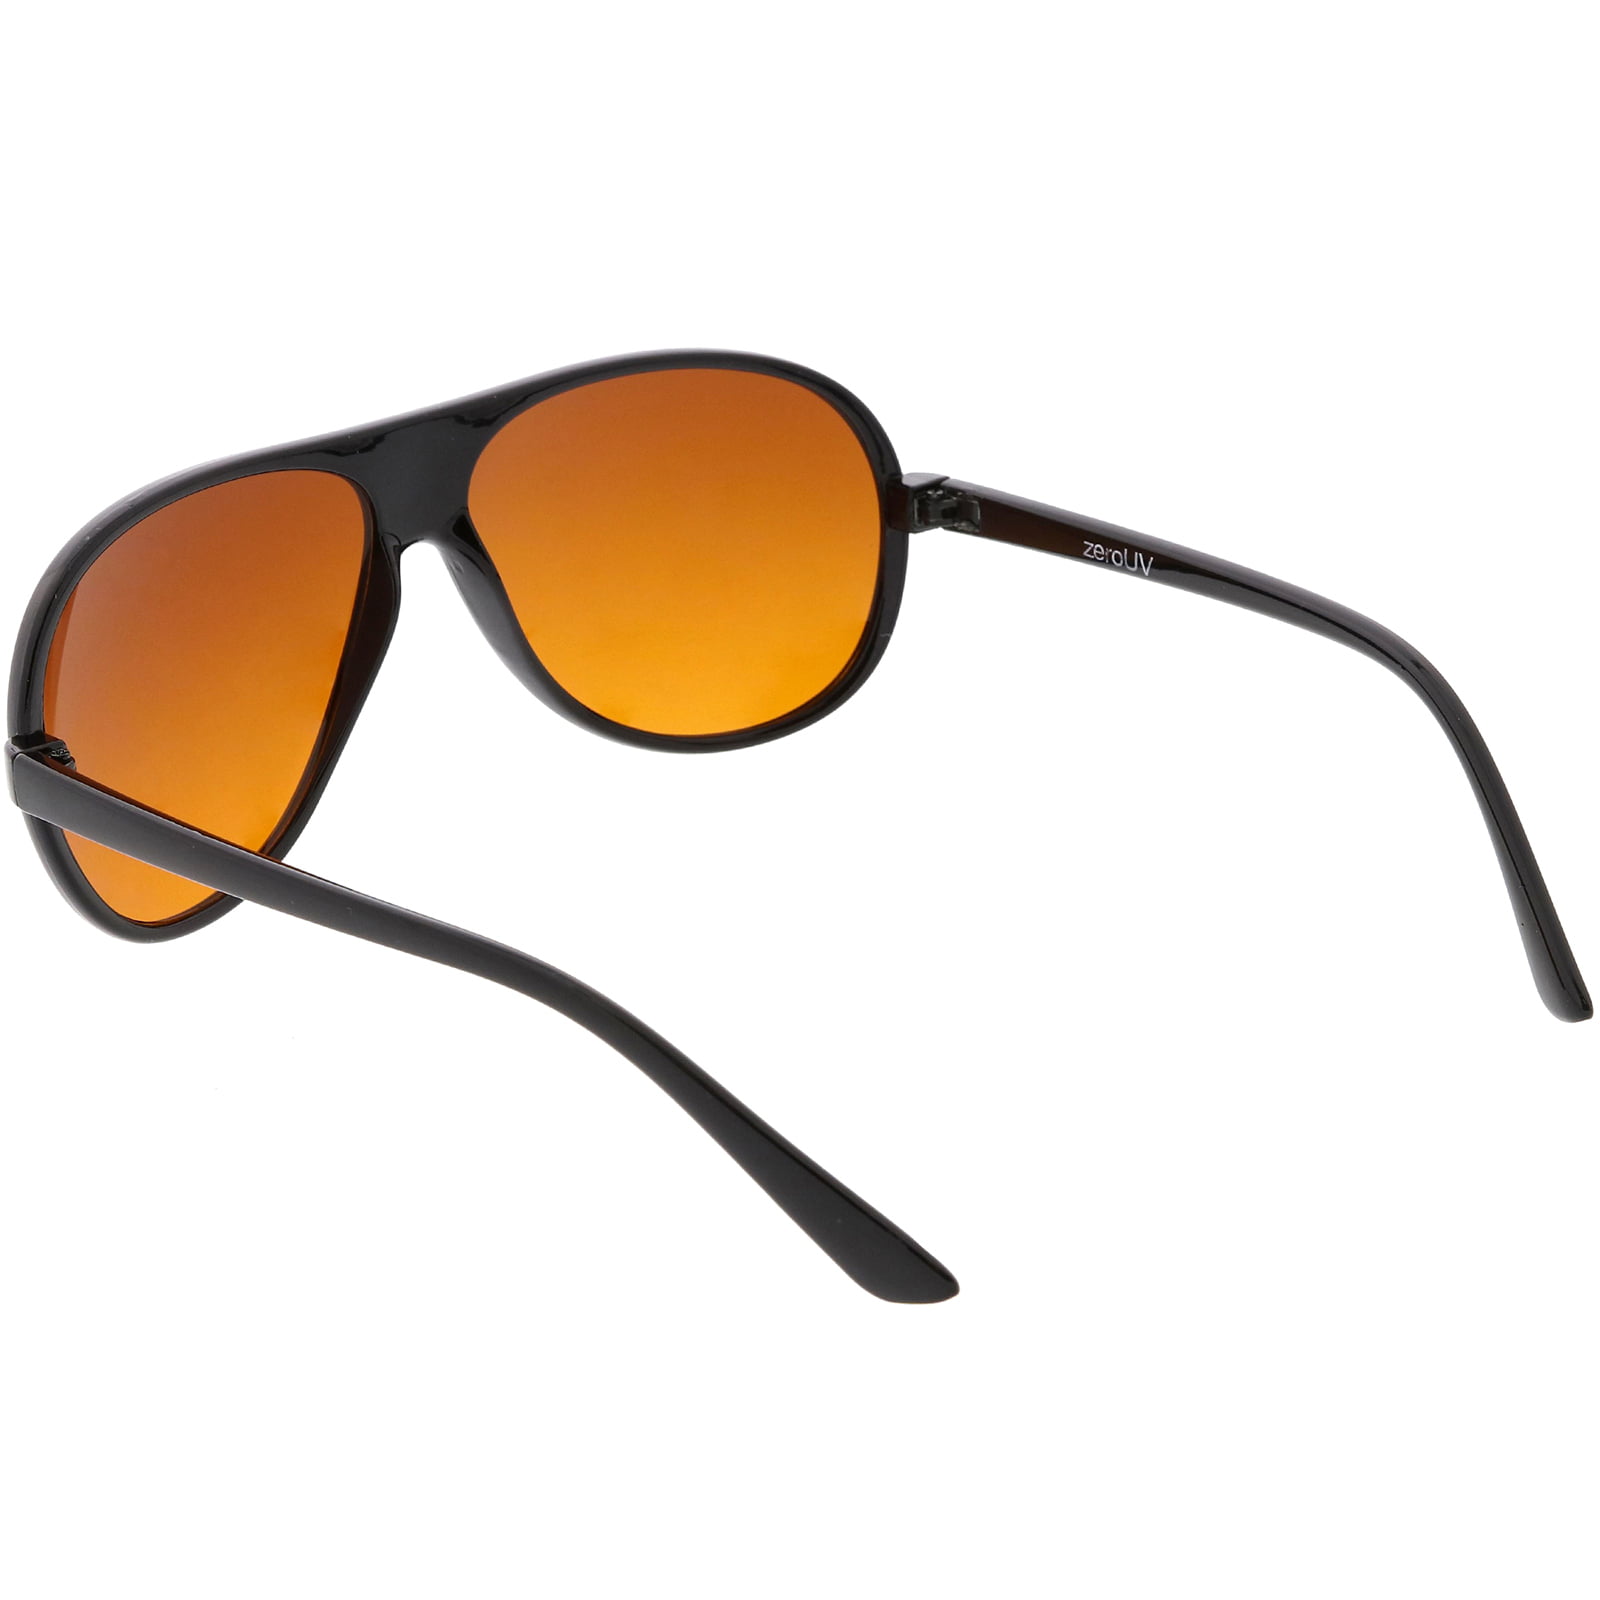 The Poppy | $35 | Orange Frame & Blue Lens Sunglasses – Shop Wavey